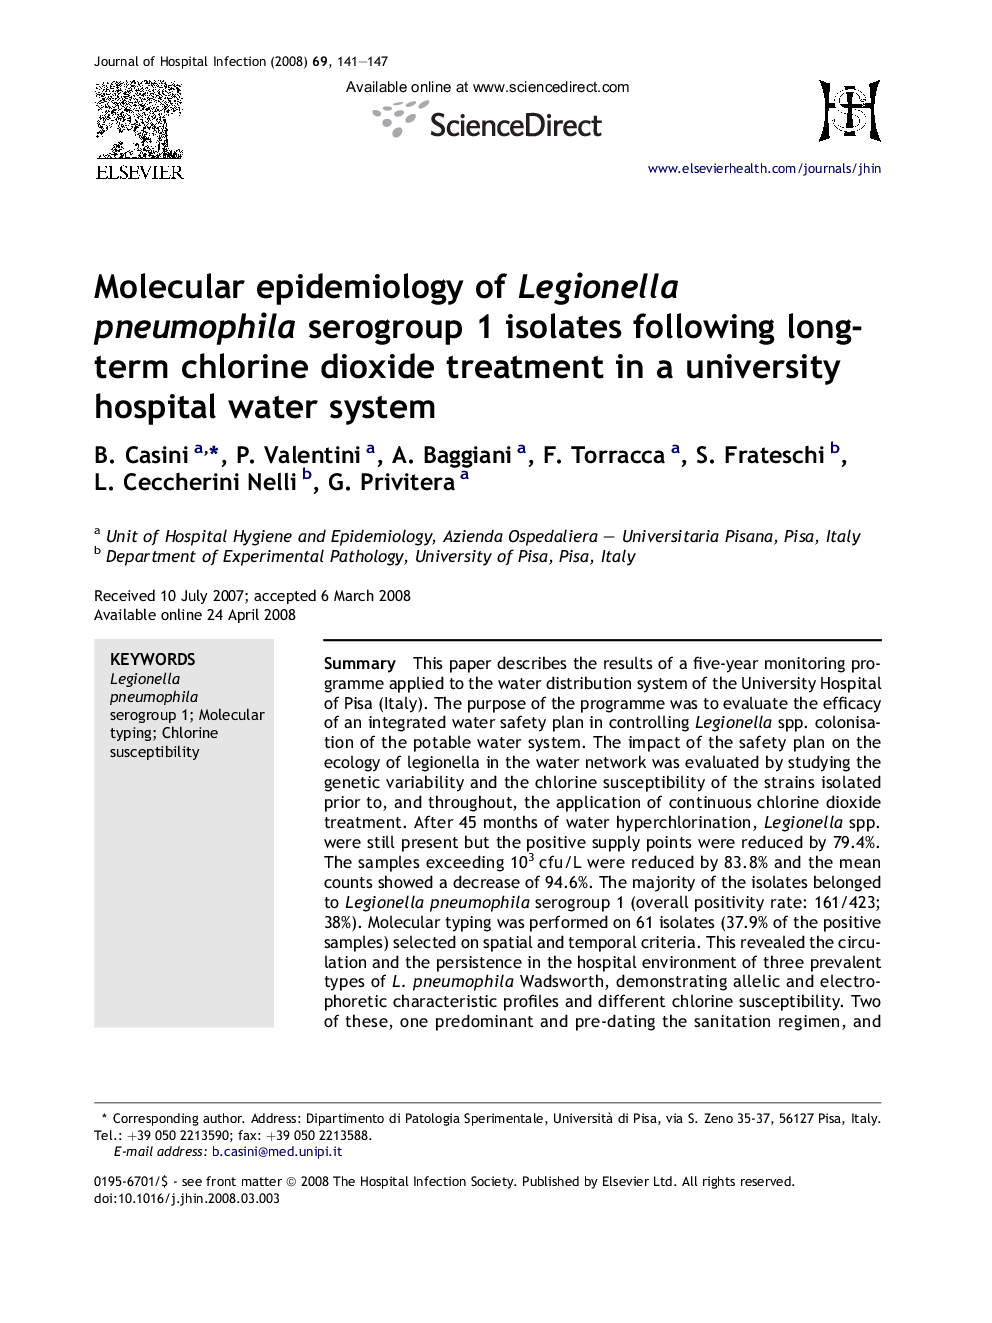 Molecular epidemiology of Legionella pneumophila serogroup 1 isolates following long-term chlorine dioxide treatment in a university hospital water system